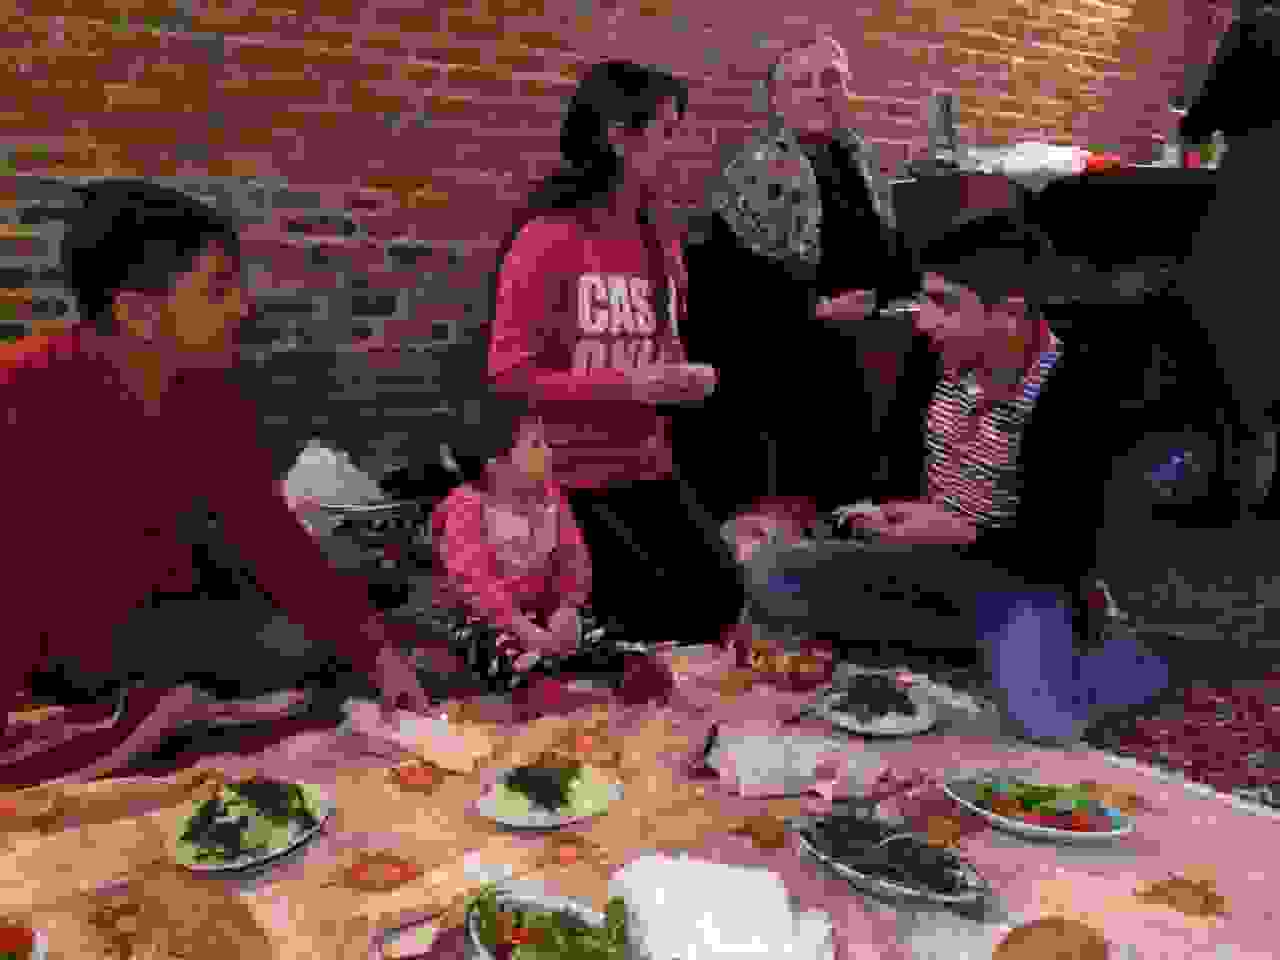 Mosque lunch in Nakhchivan